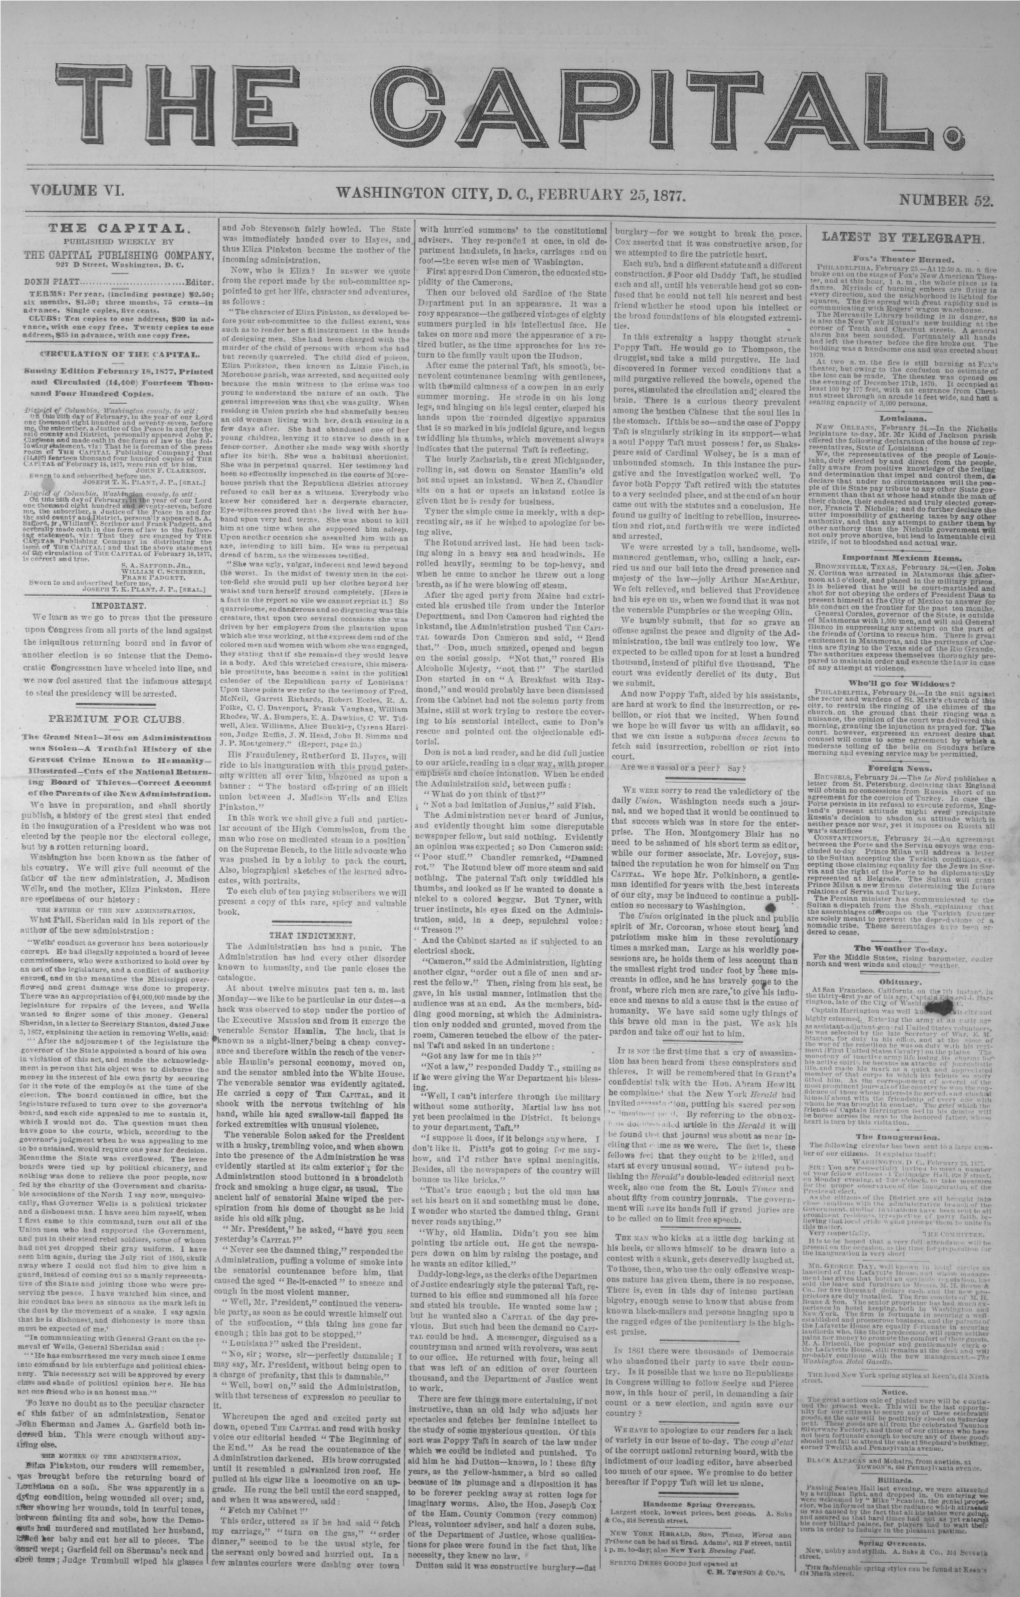 Yölume Yi. Washington City, D. C., February 25,1877